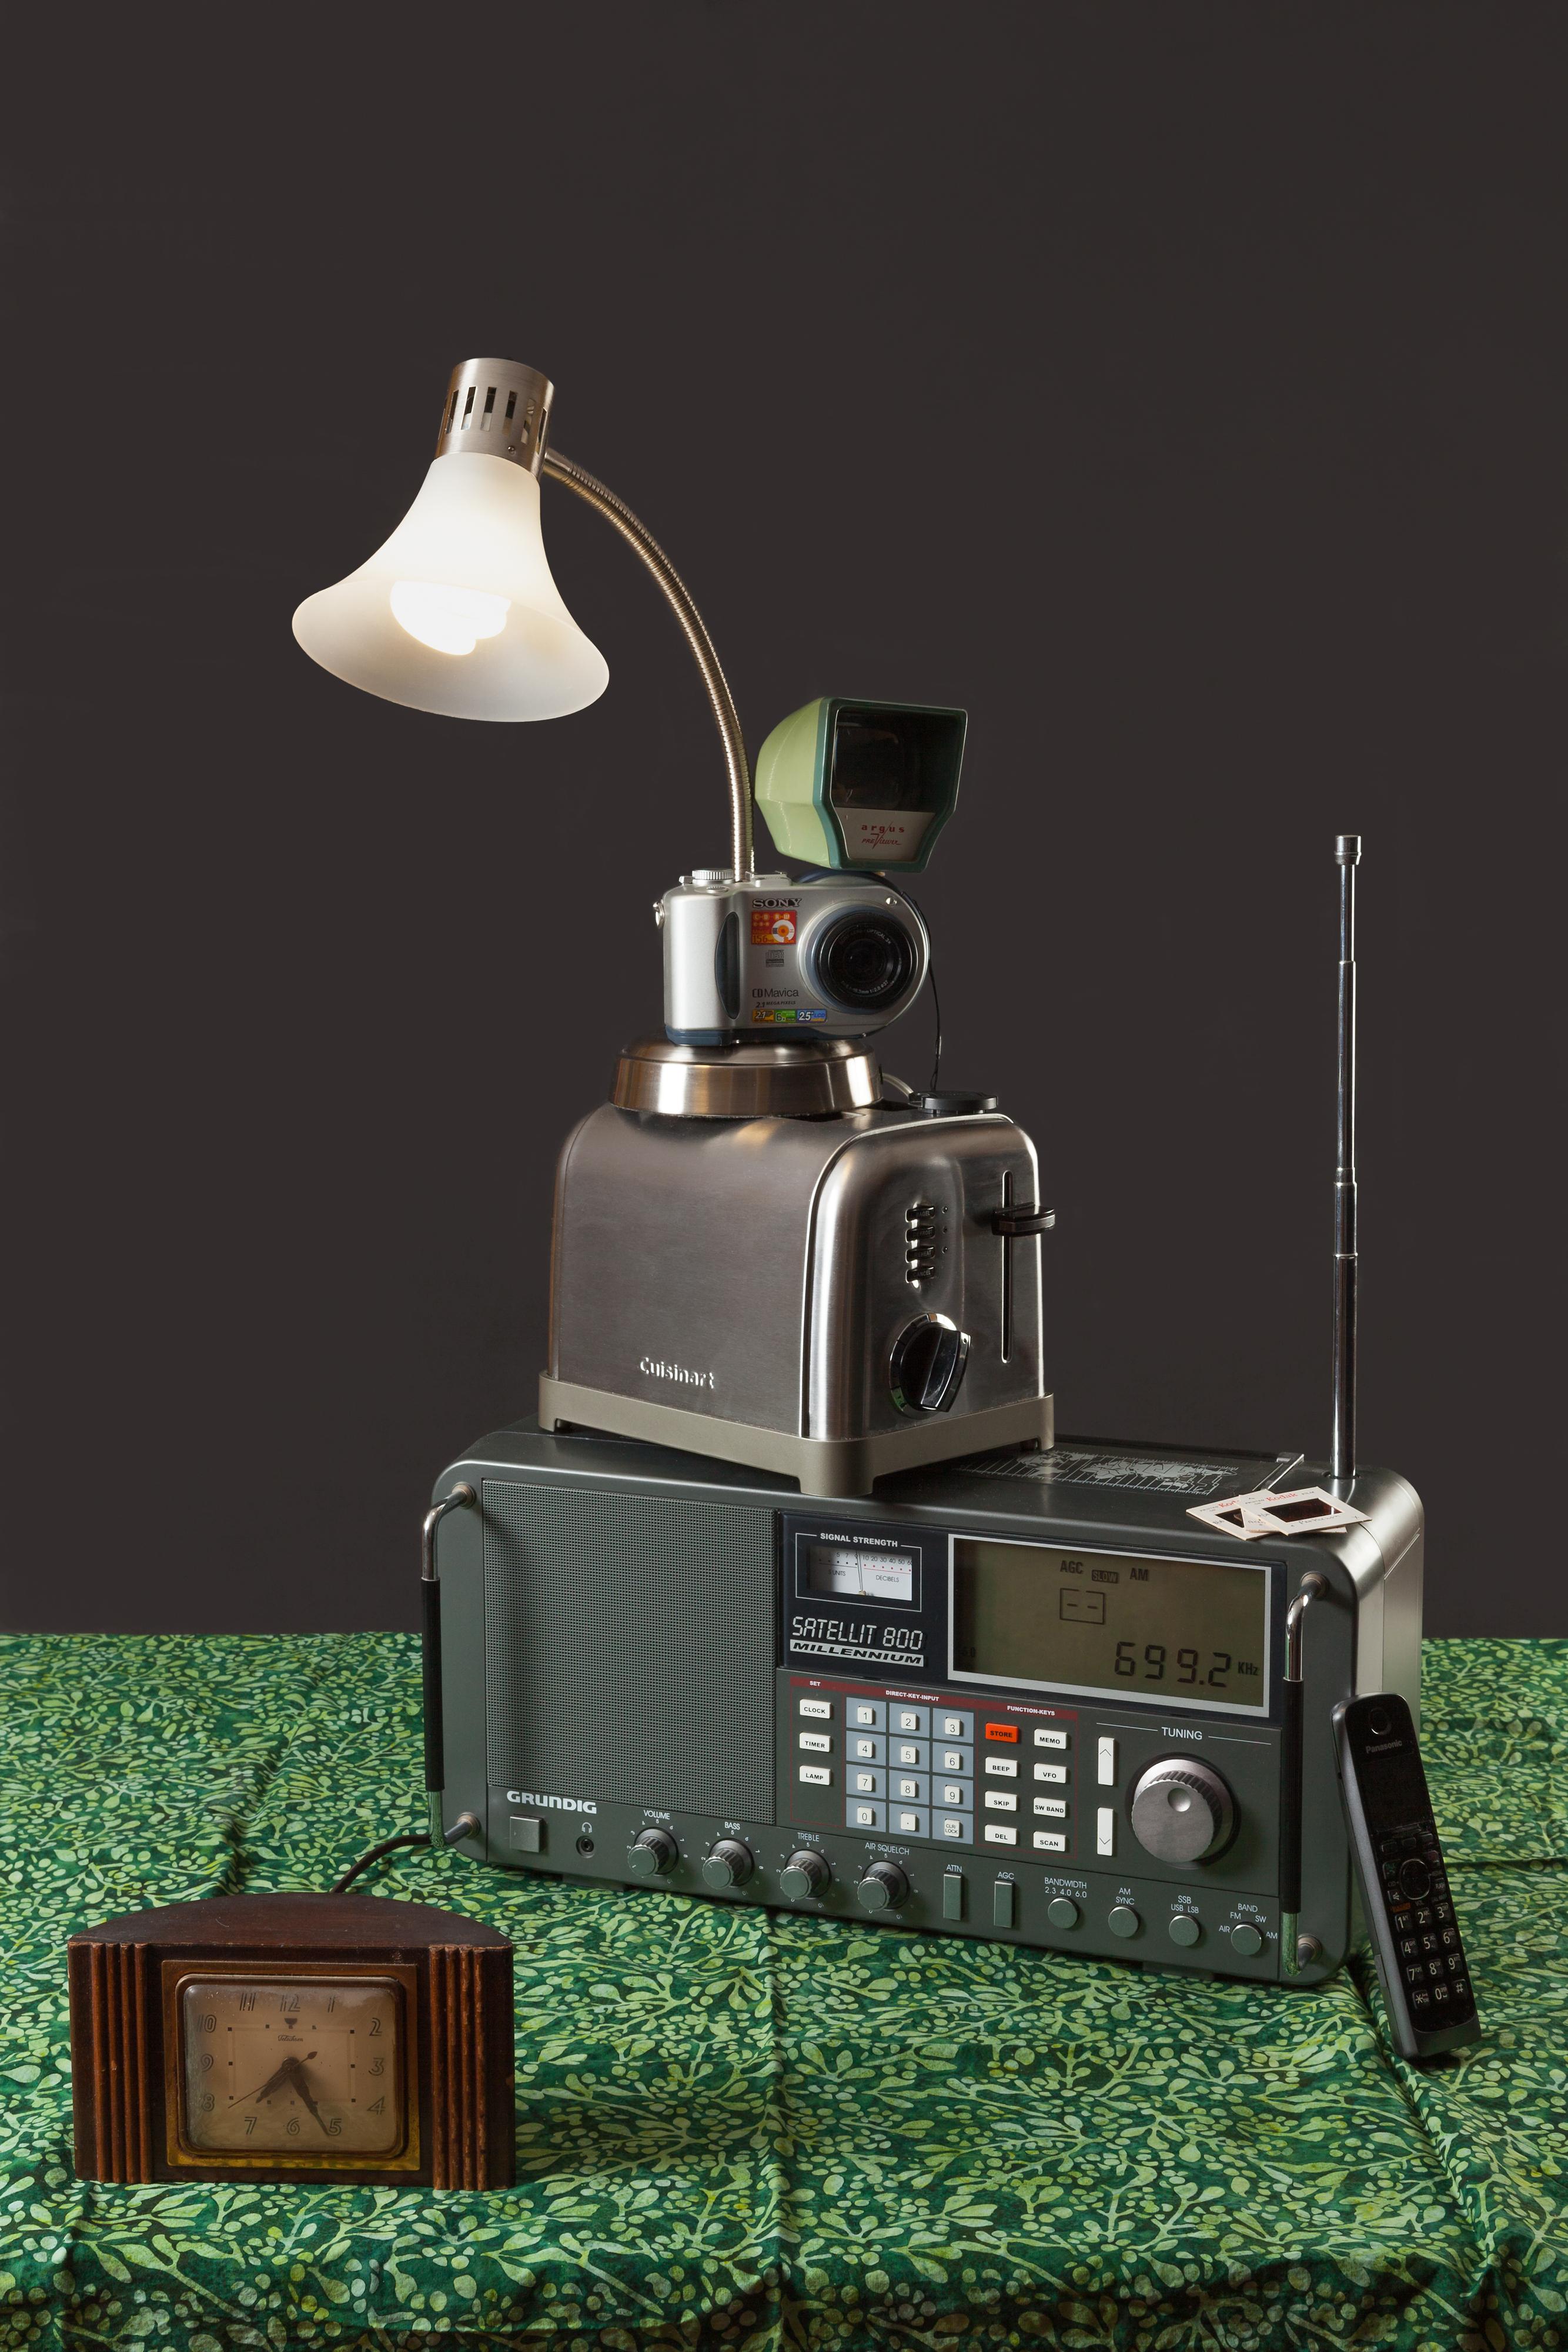 "Tech Vanitas: Satellite Radio" Contemporary Still-life Photo of Vintage Tech